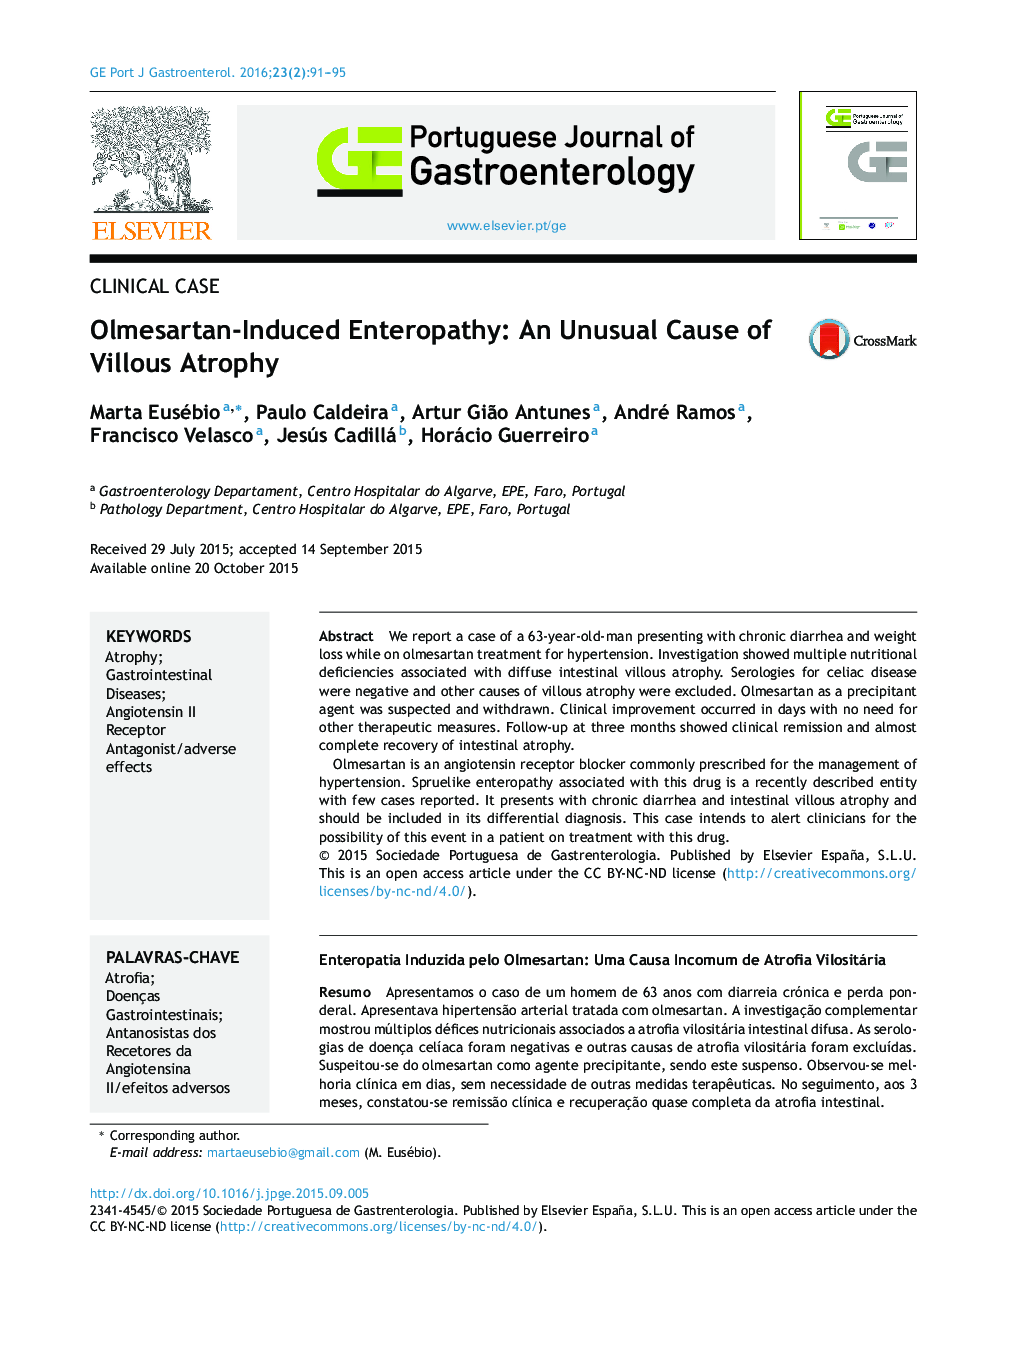 Olmesartan-Induced Enteropathy: An Unusual Cause of Villous Atrophy